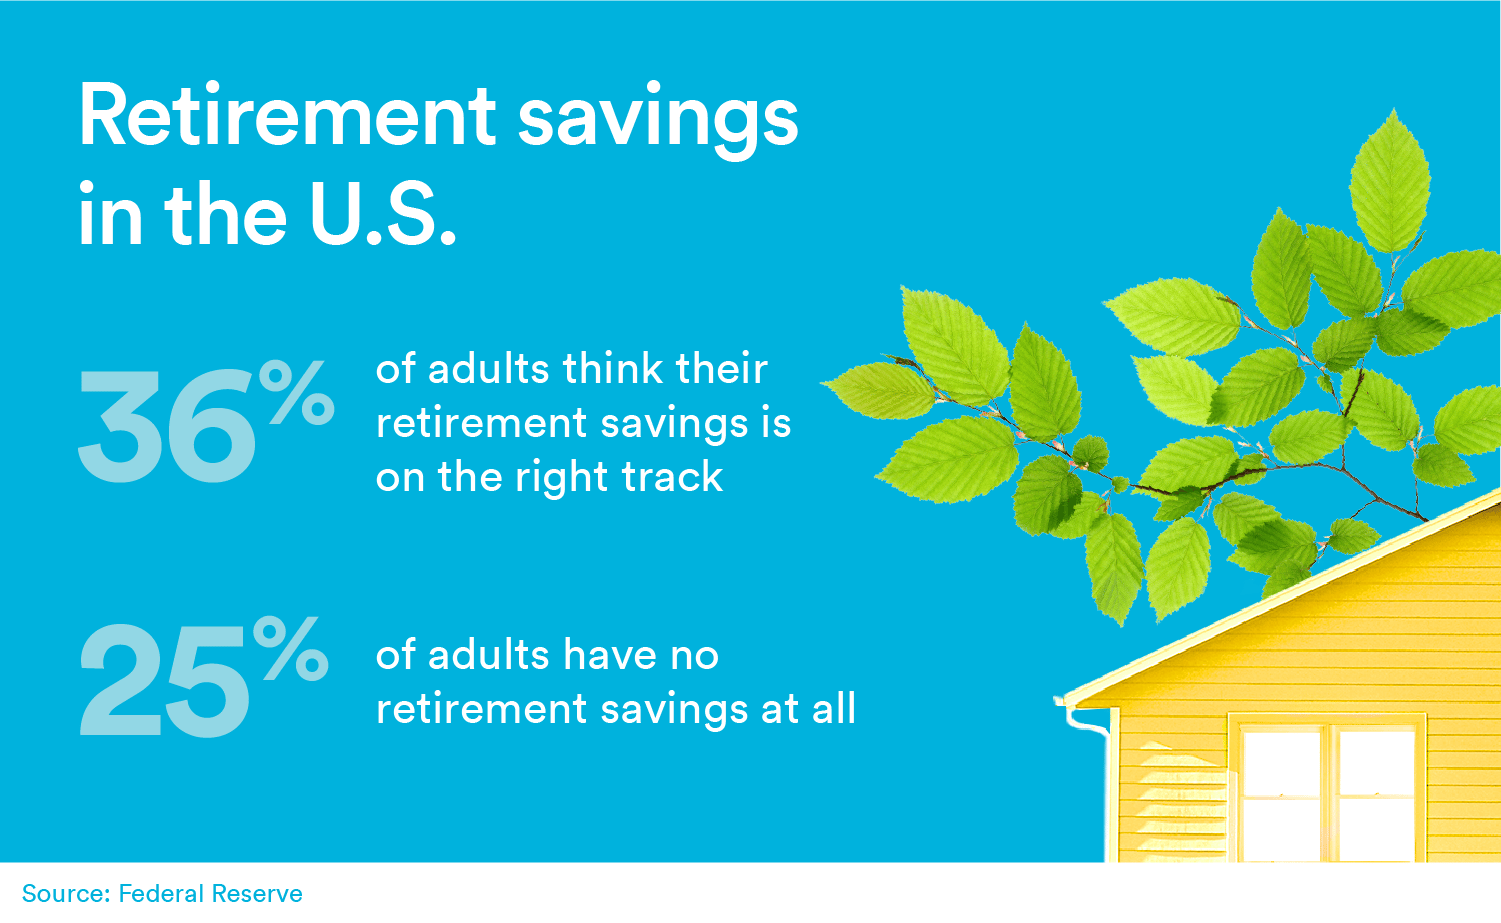 retirement savings in the U.S.